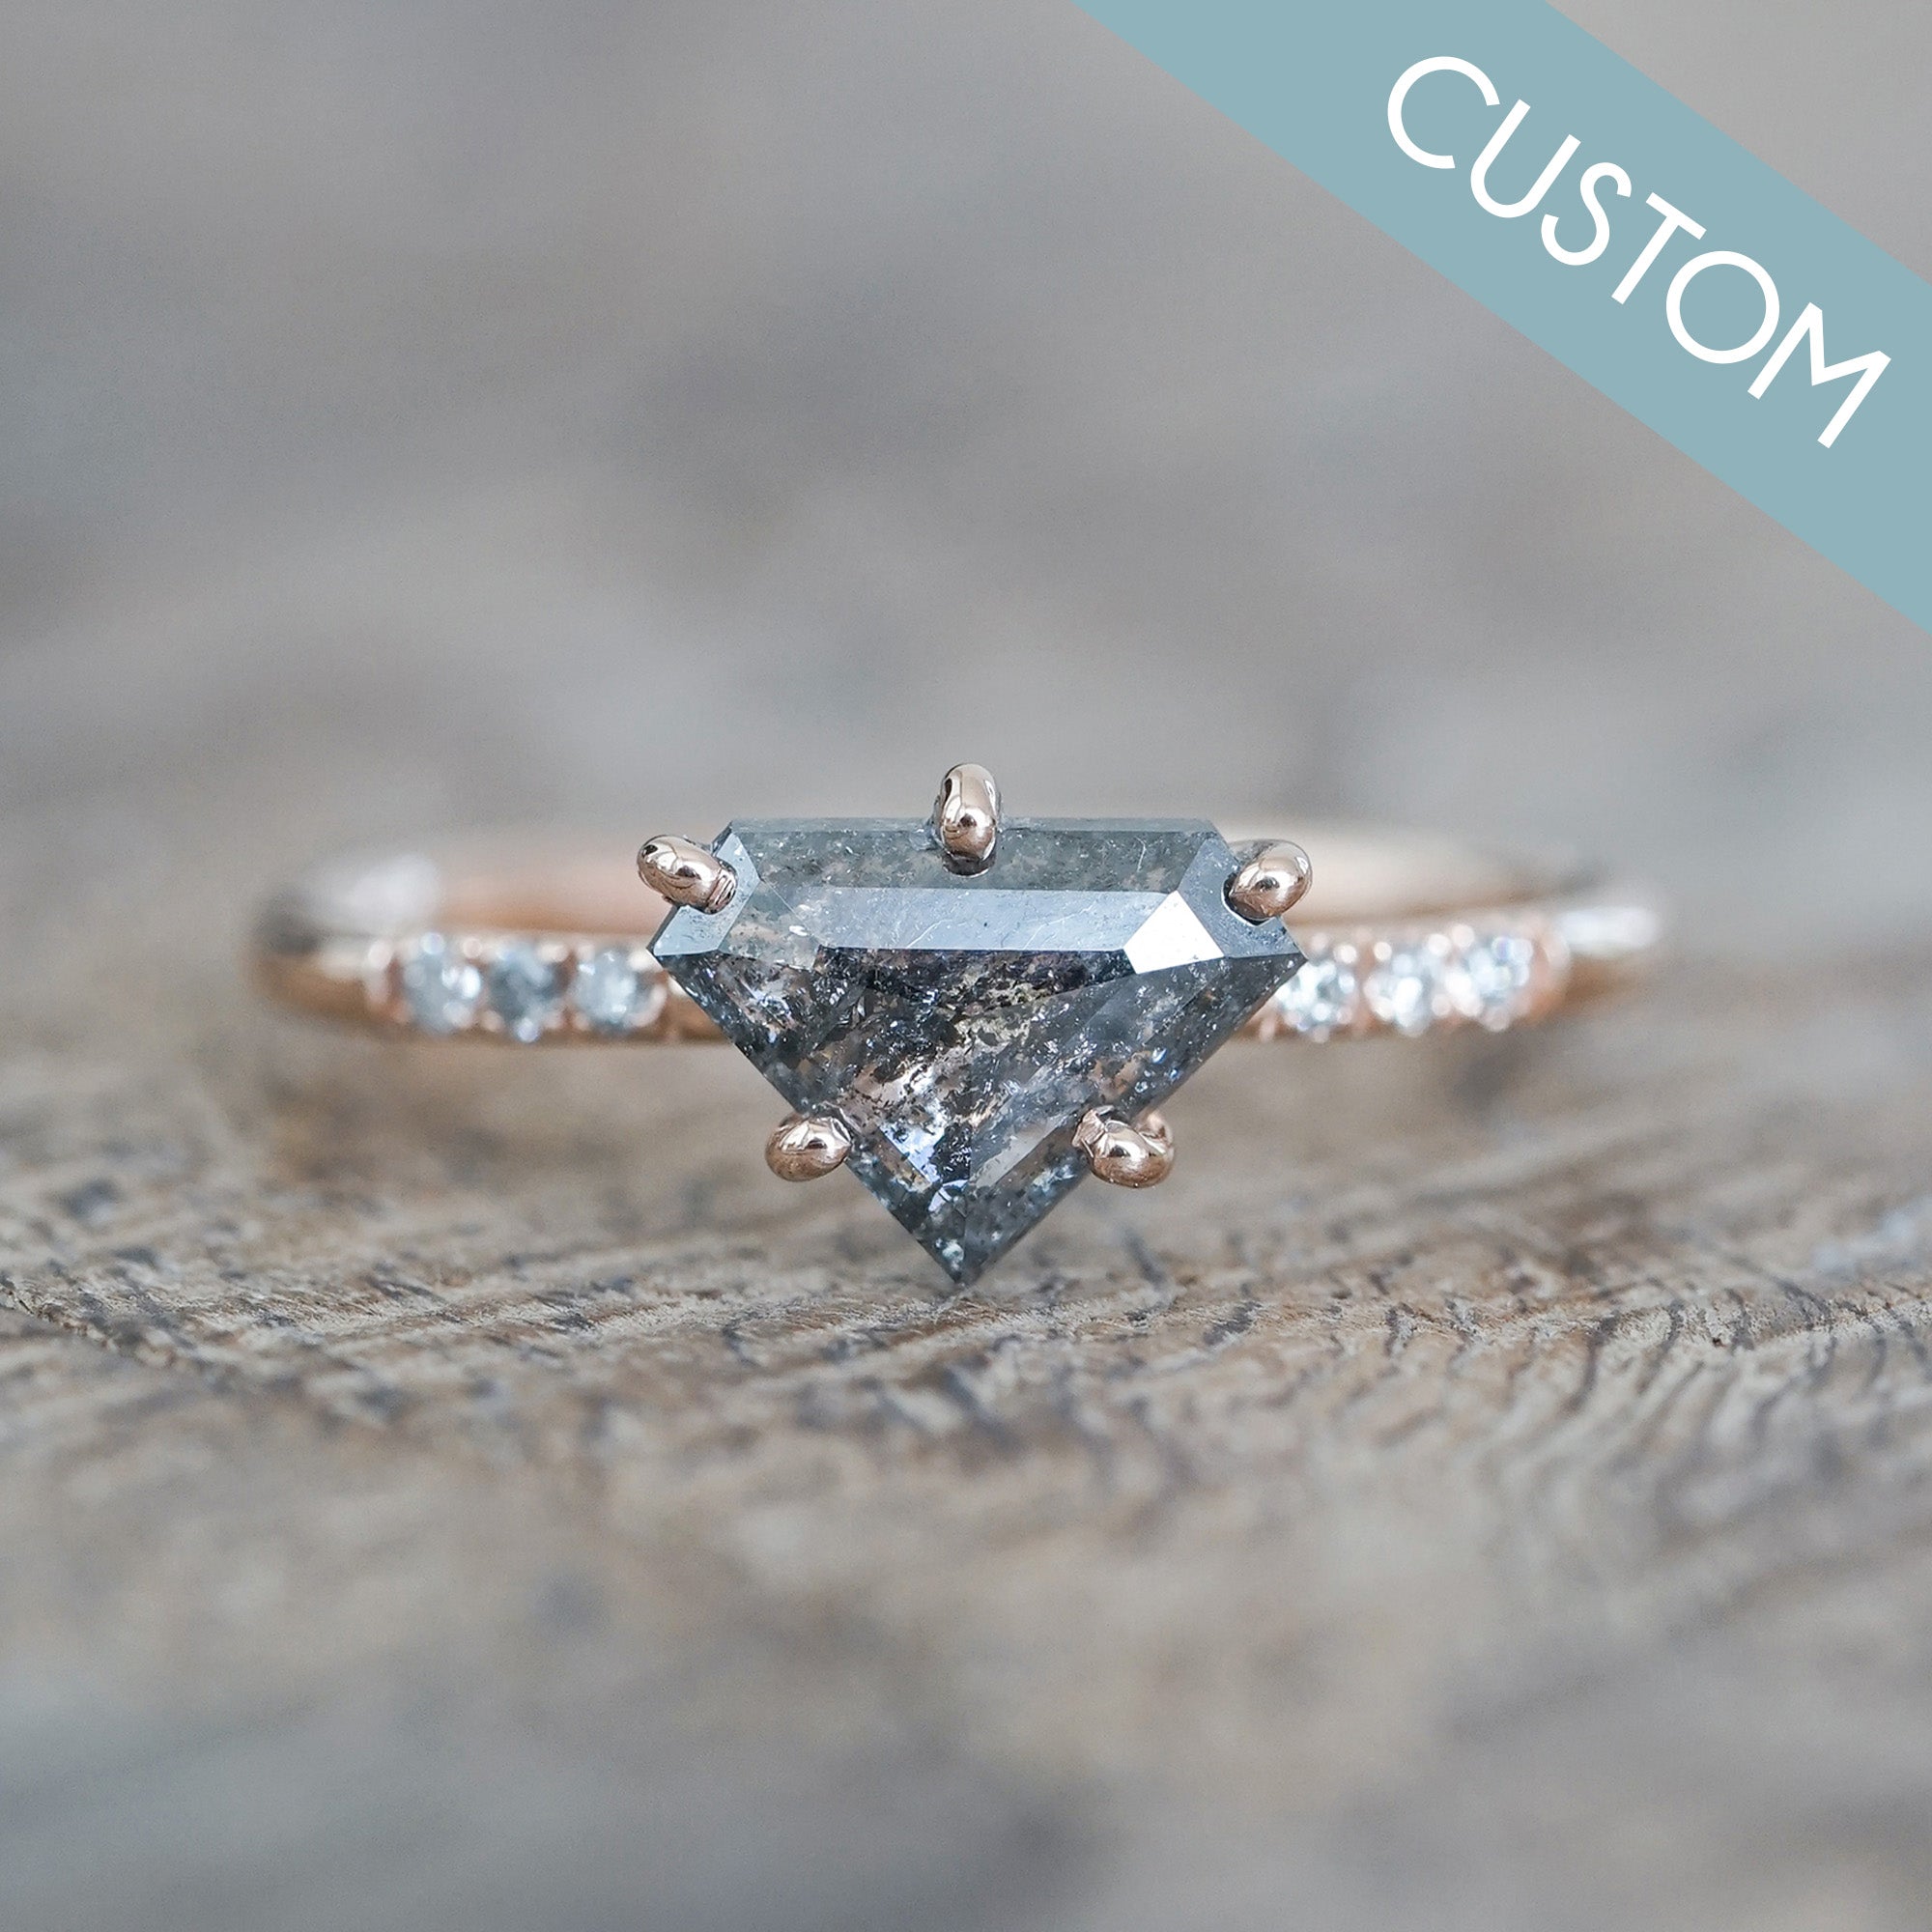 Custom Rose Cut Shield Diamond Ring - Gardens of the Sun | Ethical Jewelry